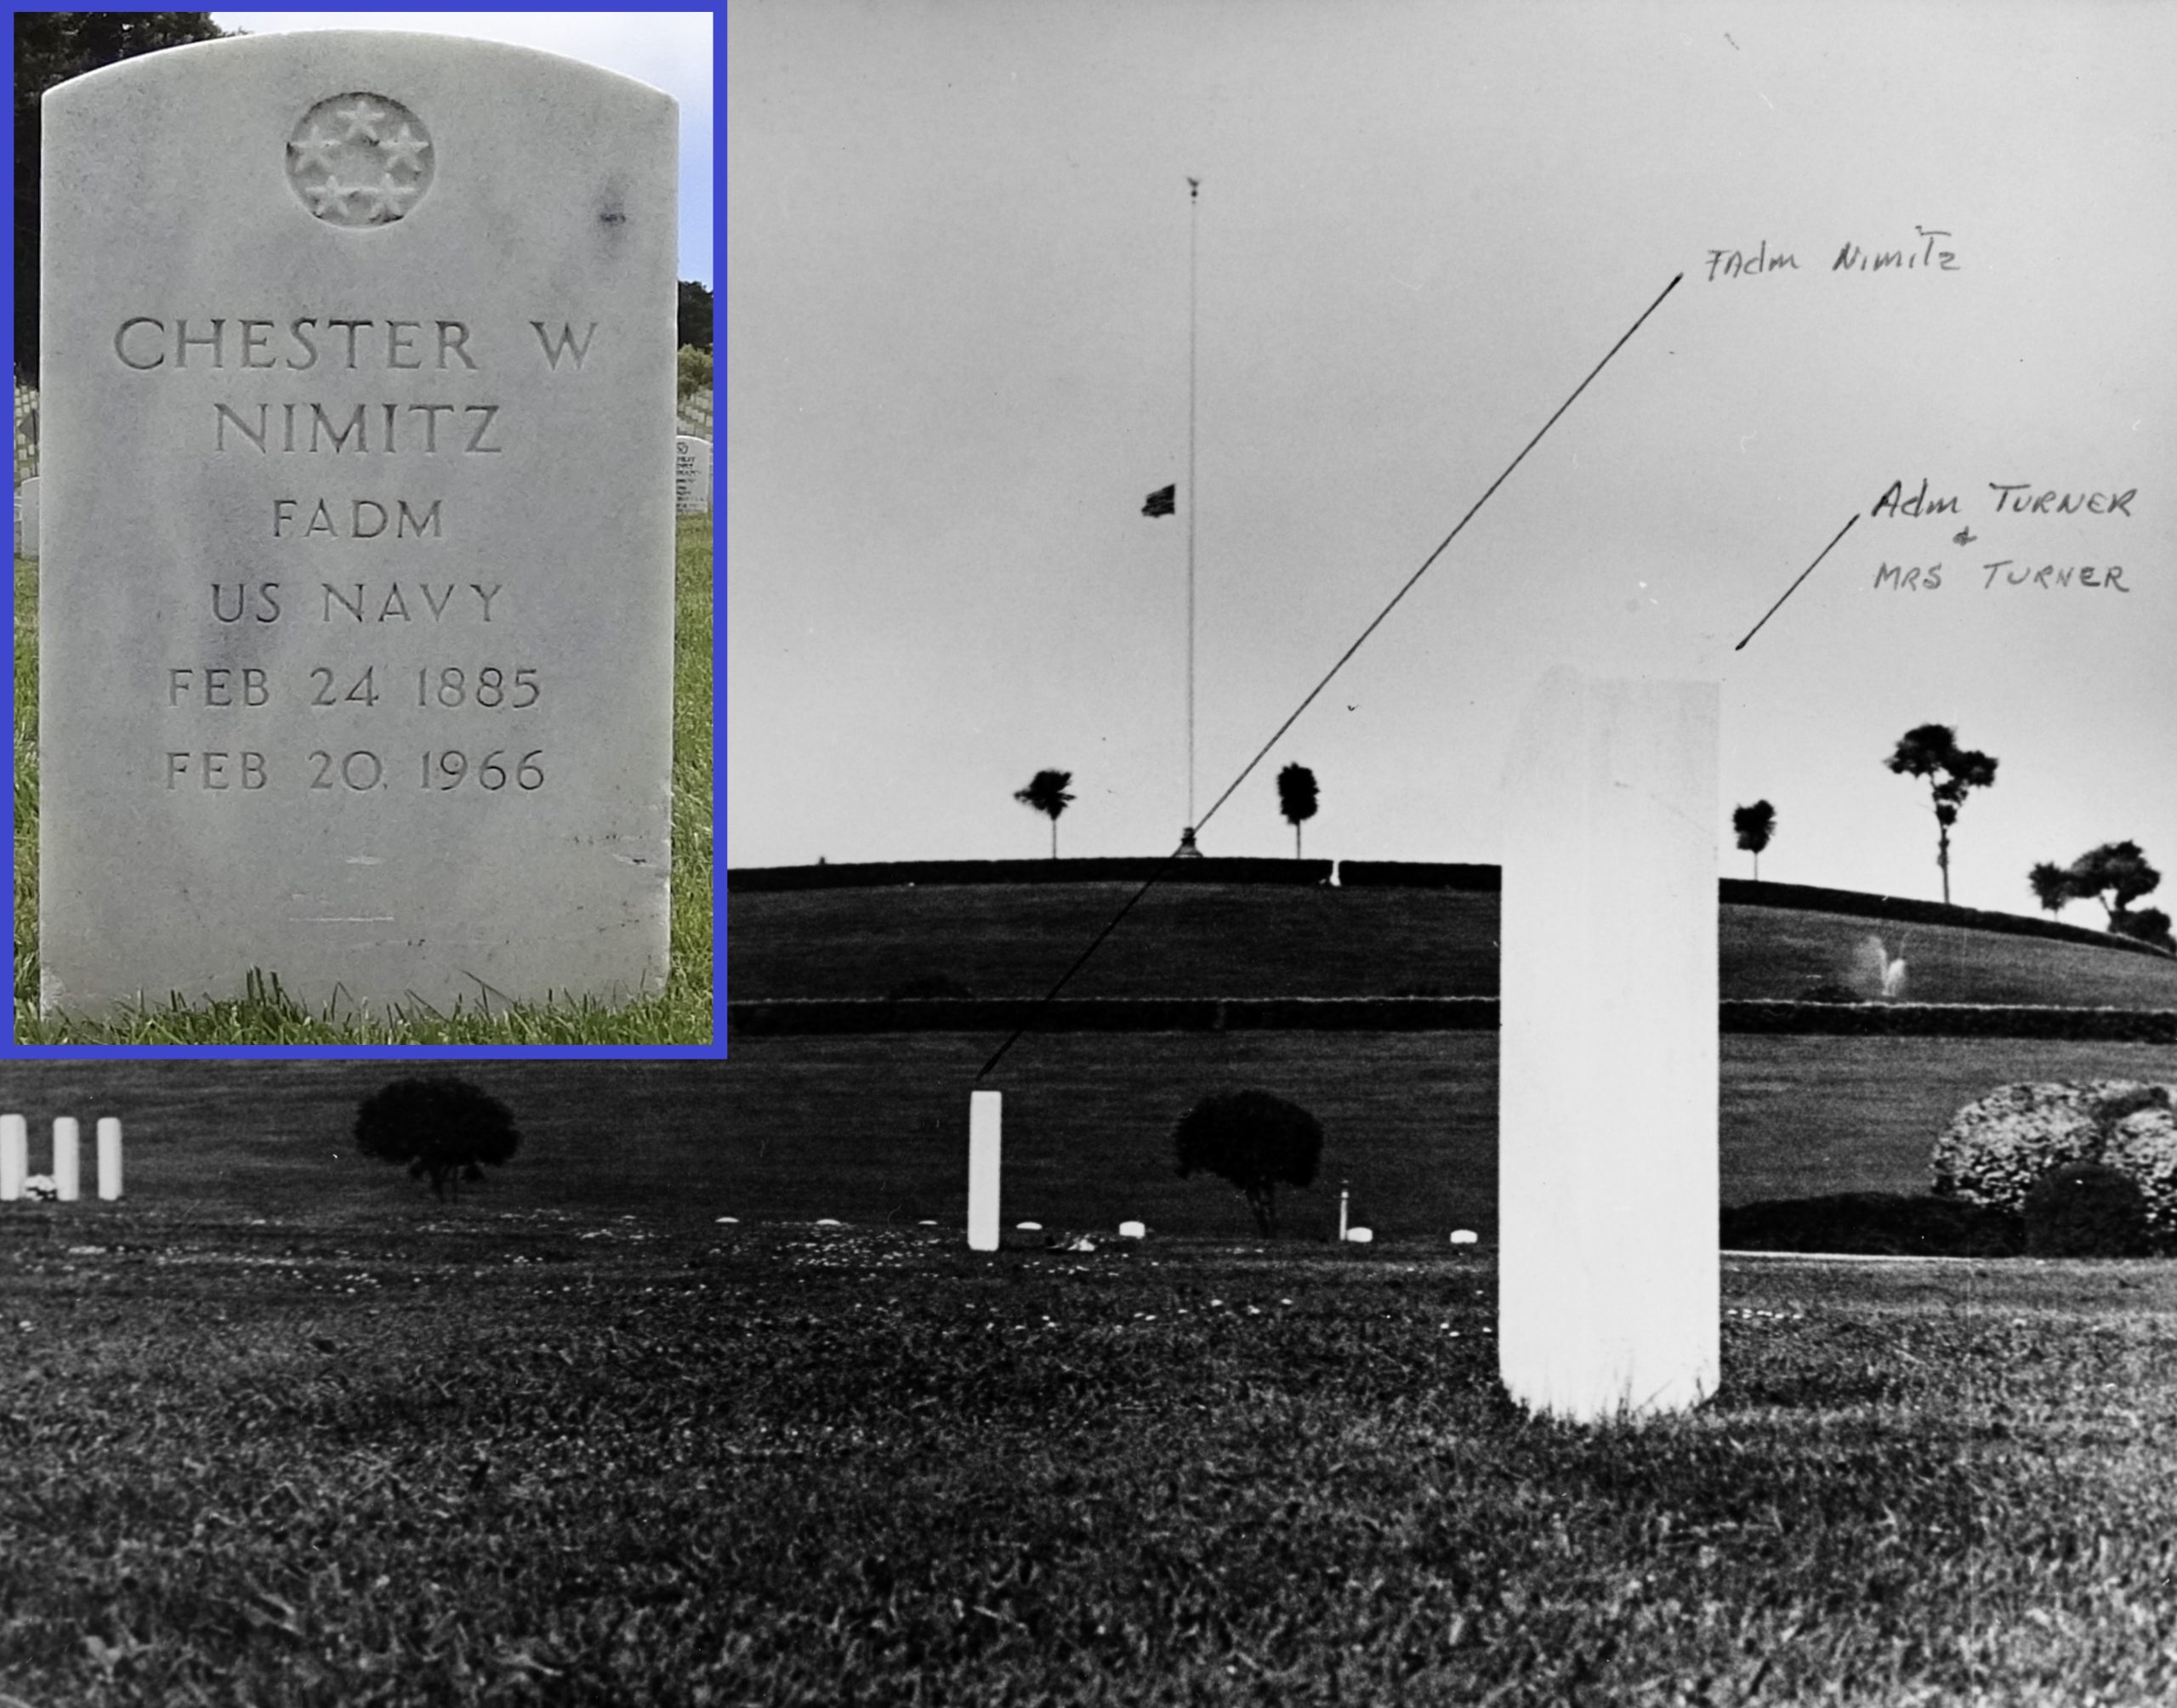 Read Object 14: Fleet Admiral Chester W. Nimitz Burial Plot at Golden Gate National Cemetery